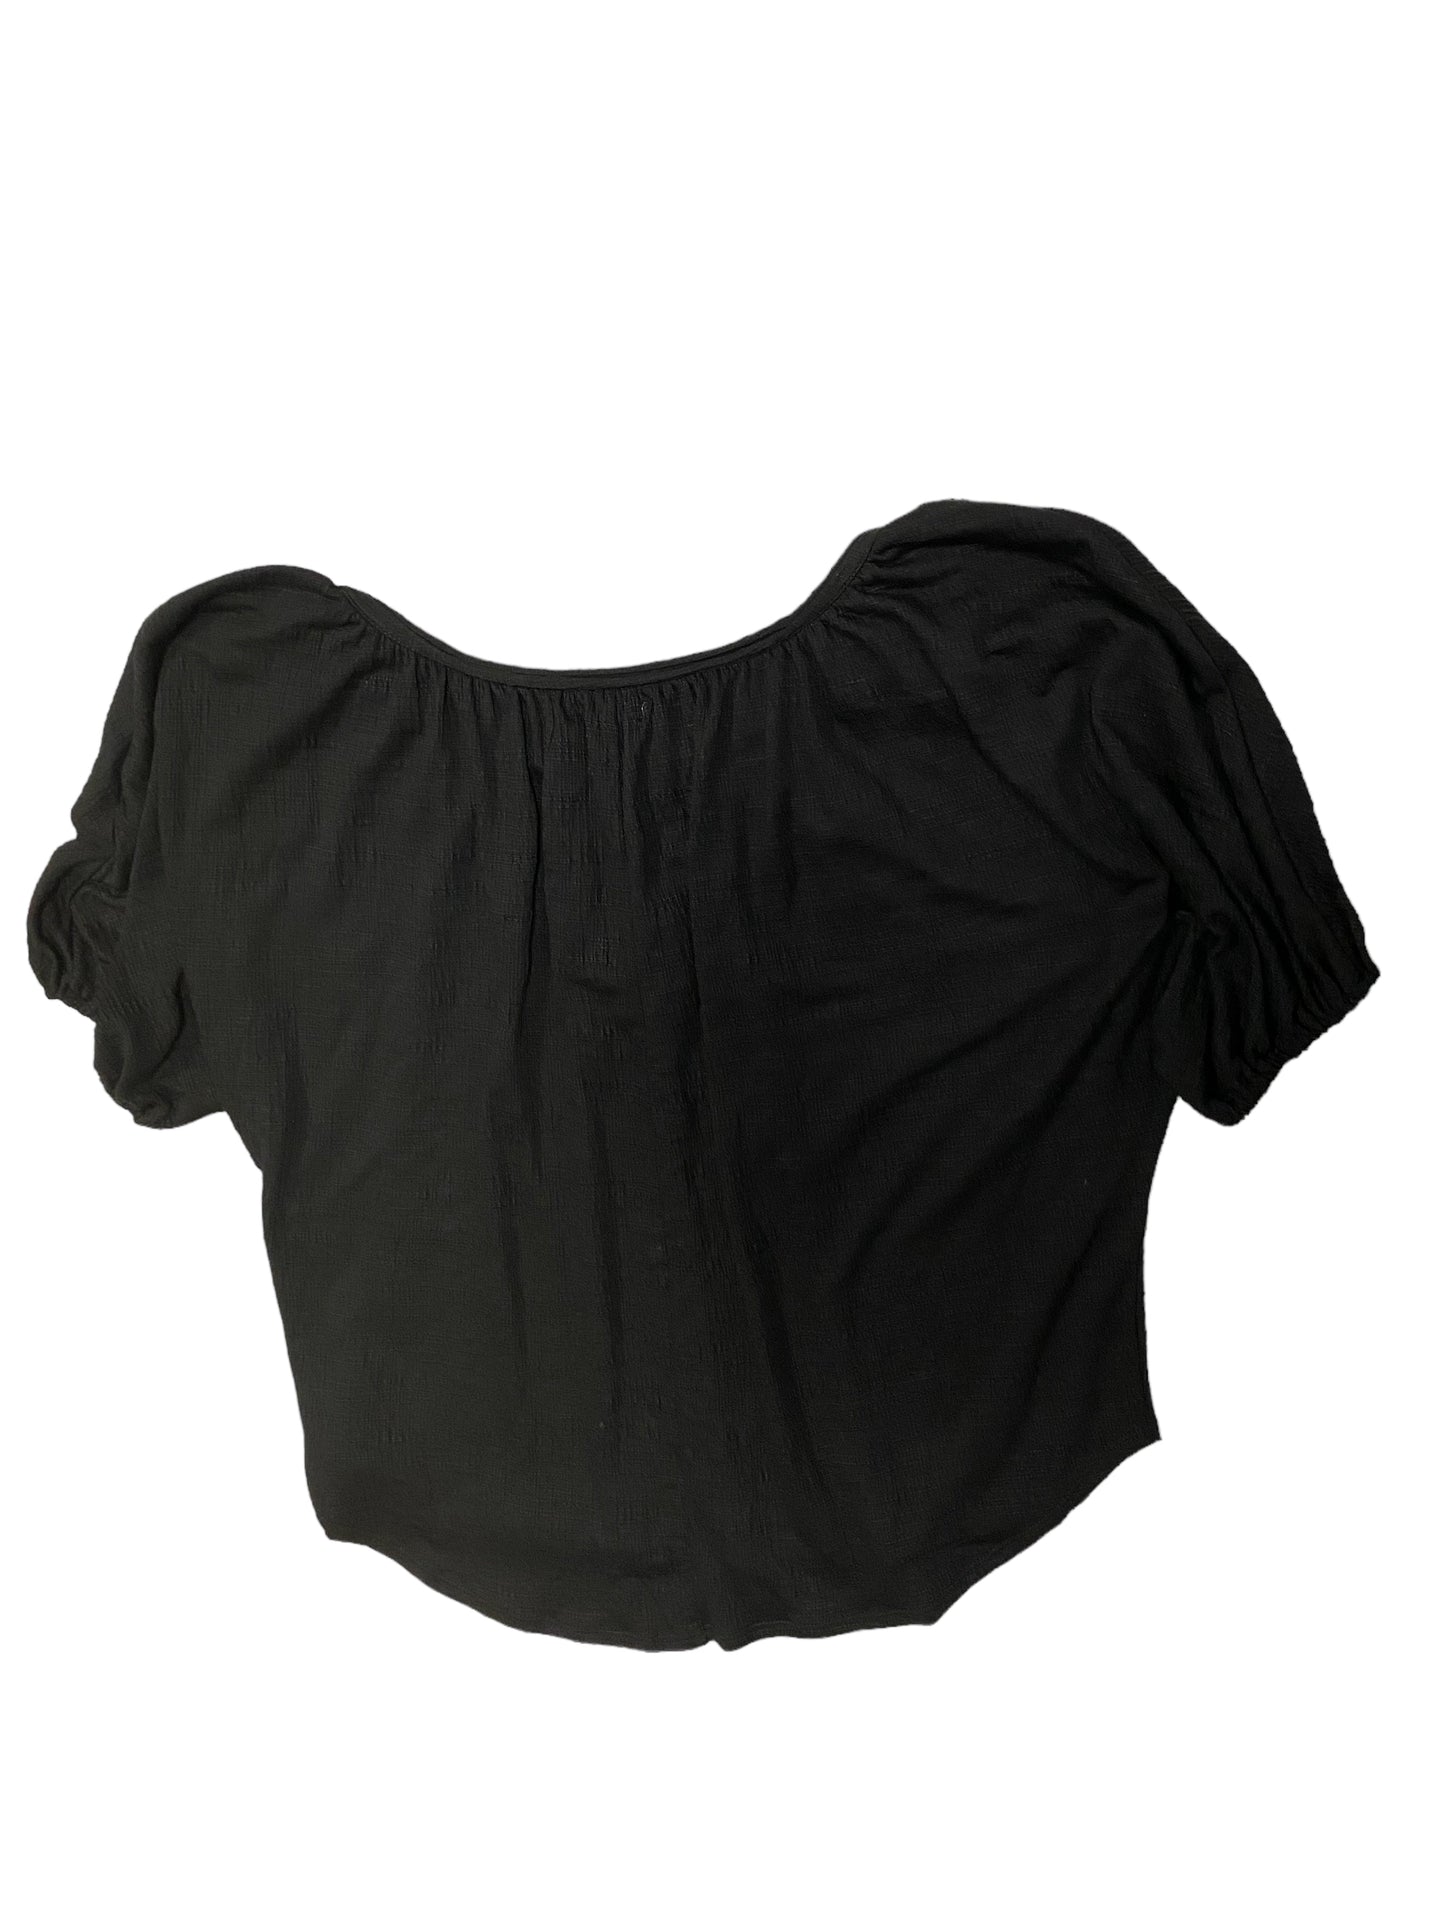 Black Top Short Sleeve Max Studio, Size Xs